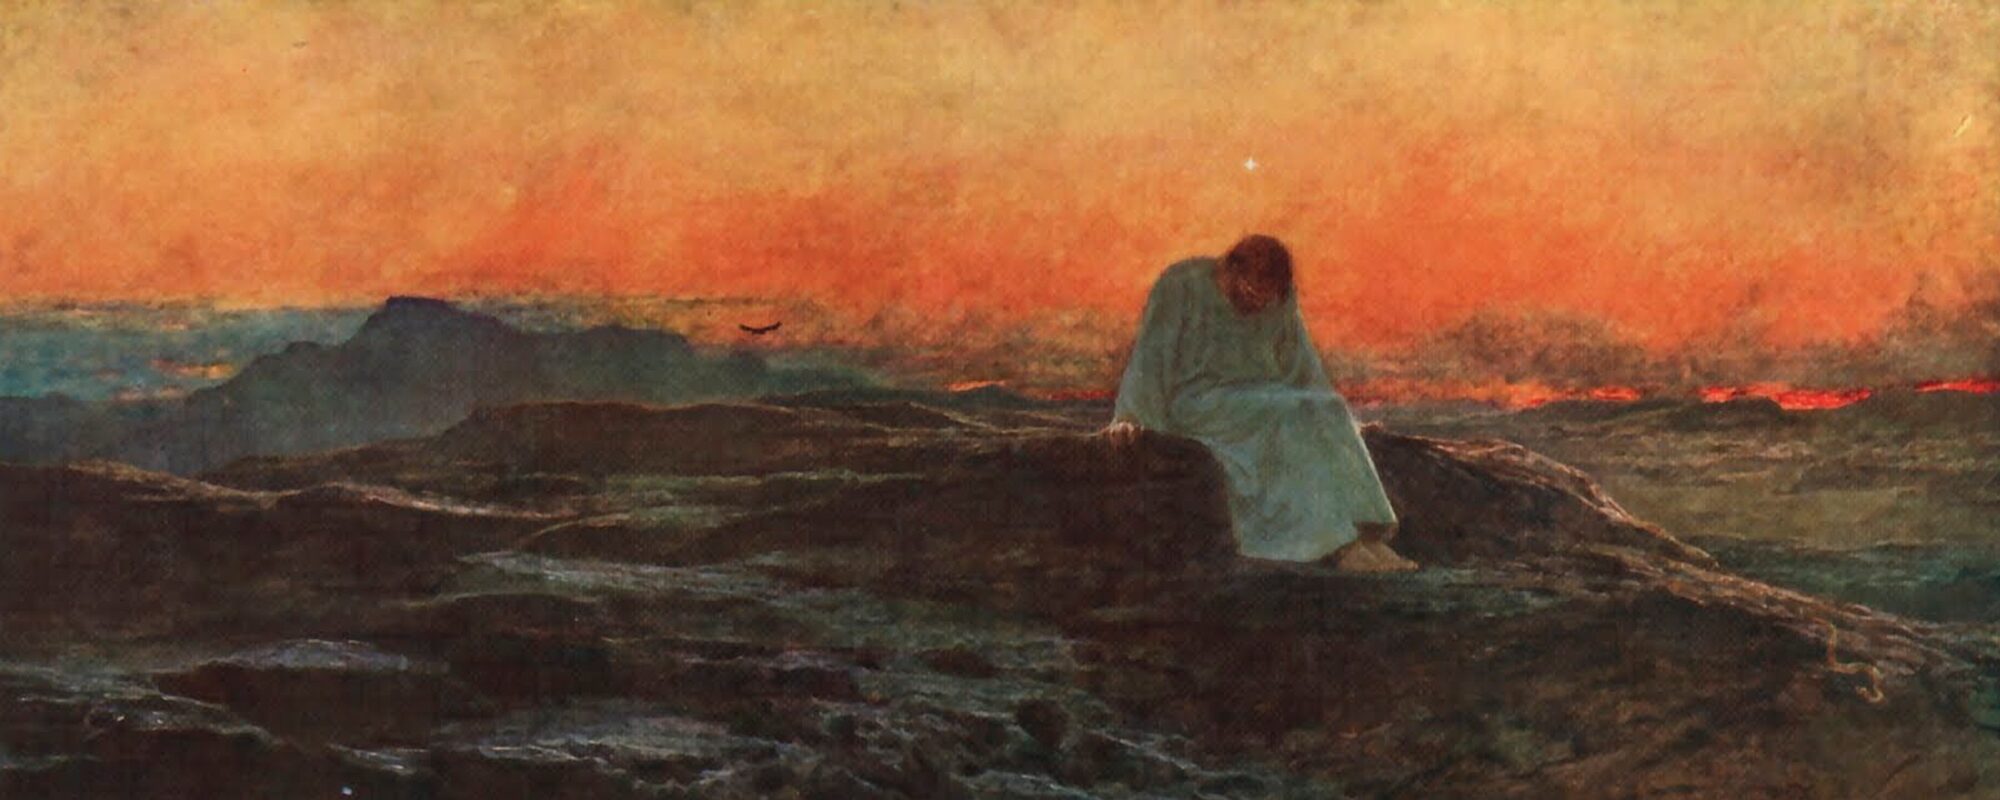 Painting Jesus in the Desert